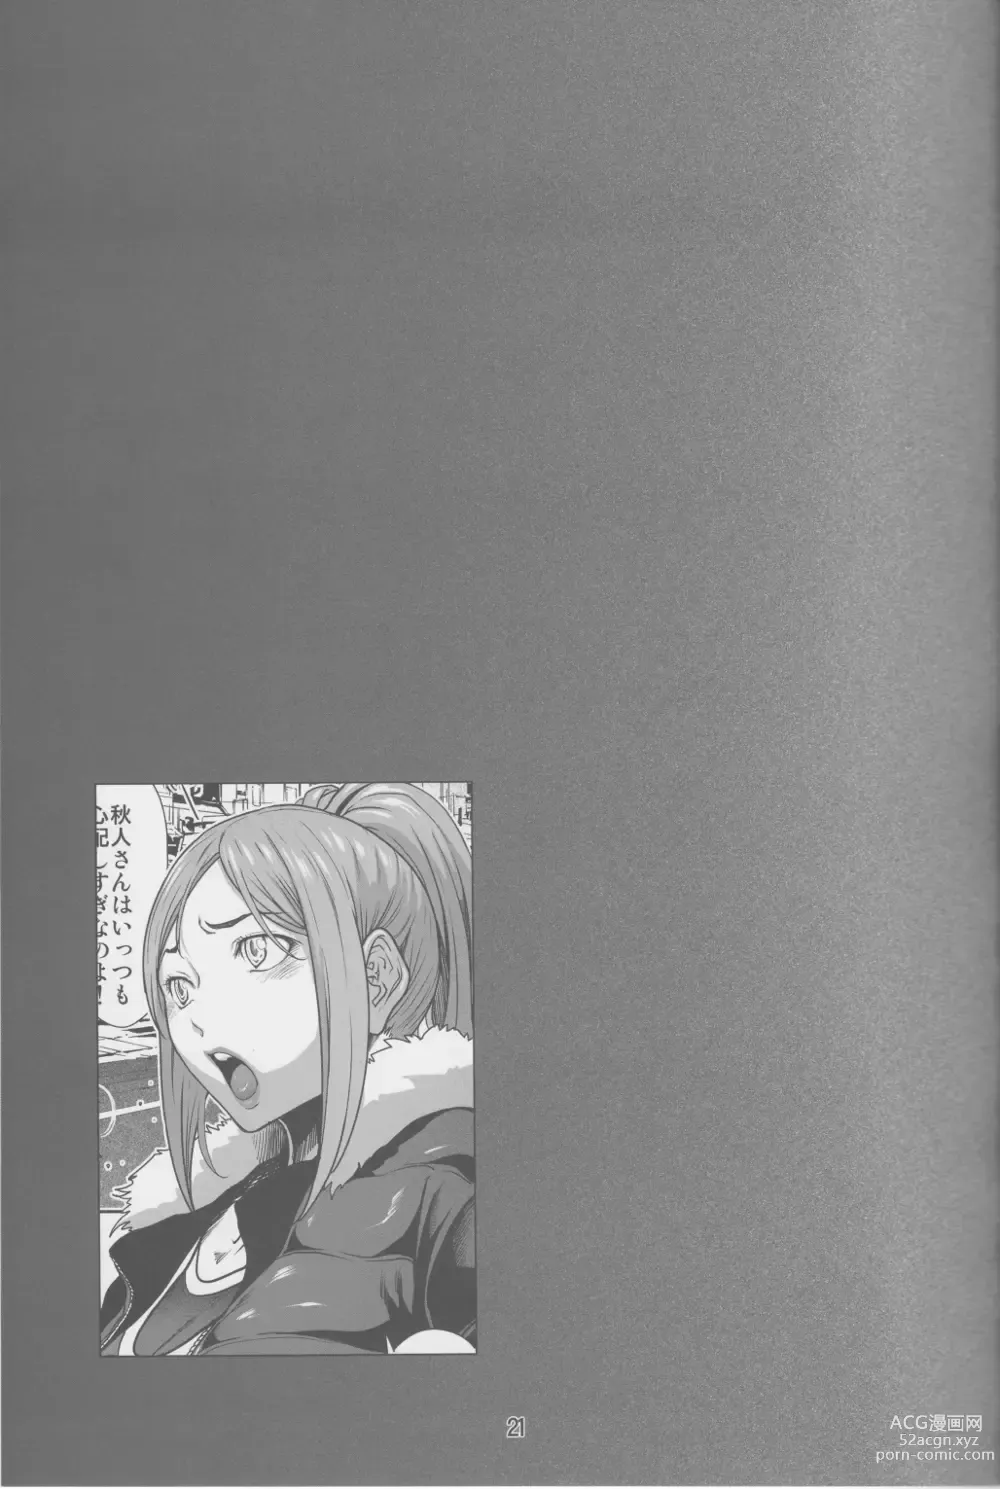 Page 20 of doujinshi BAKULOVE. 06